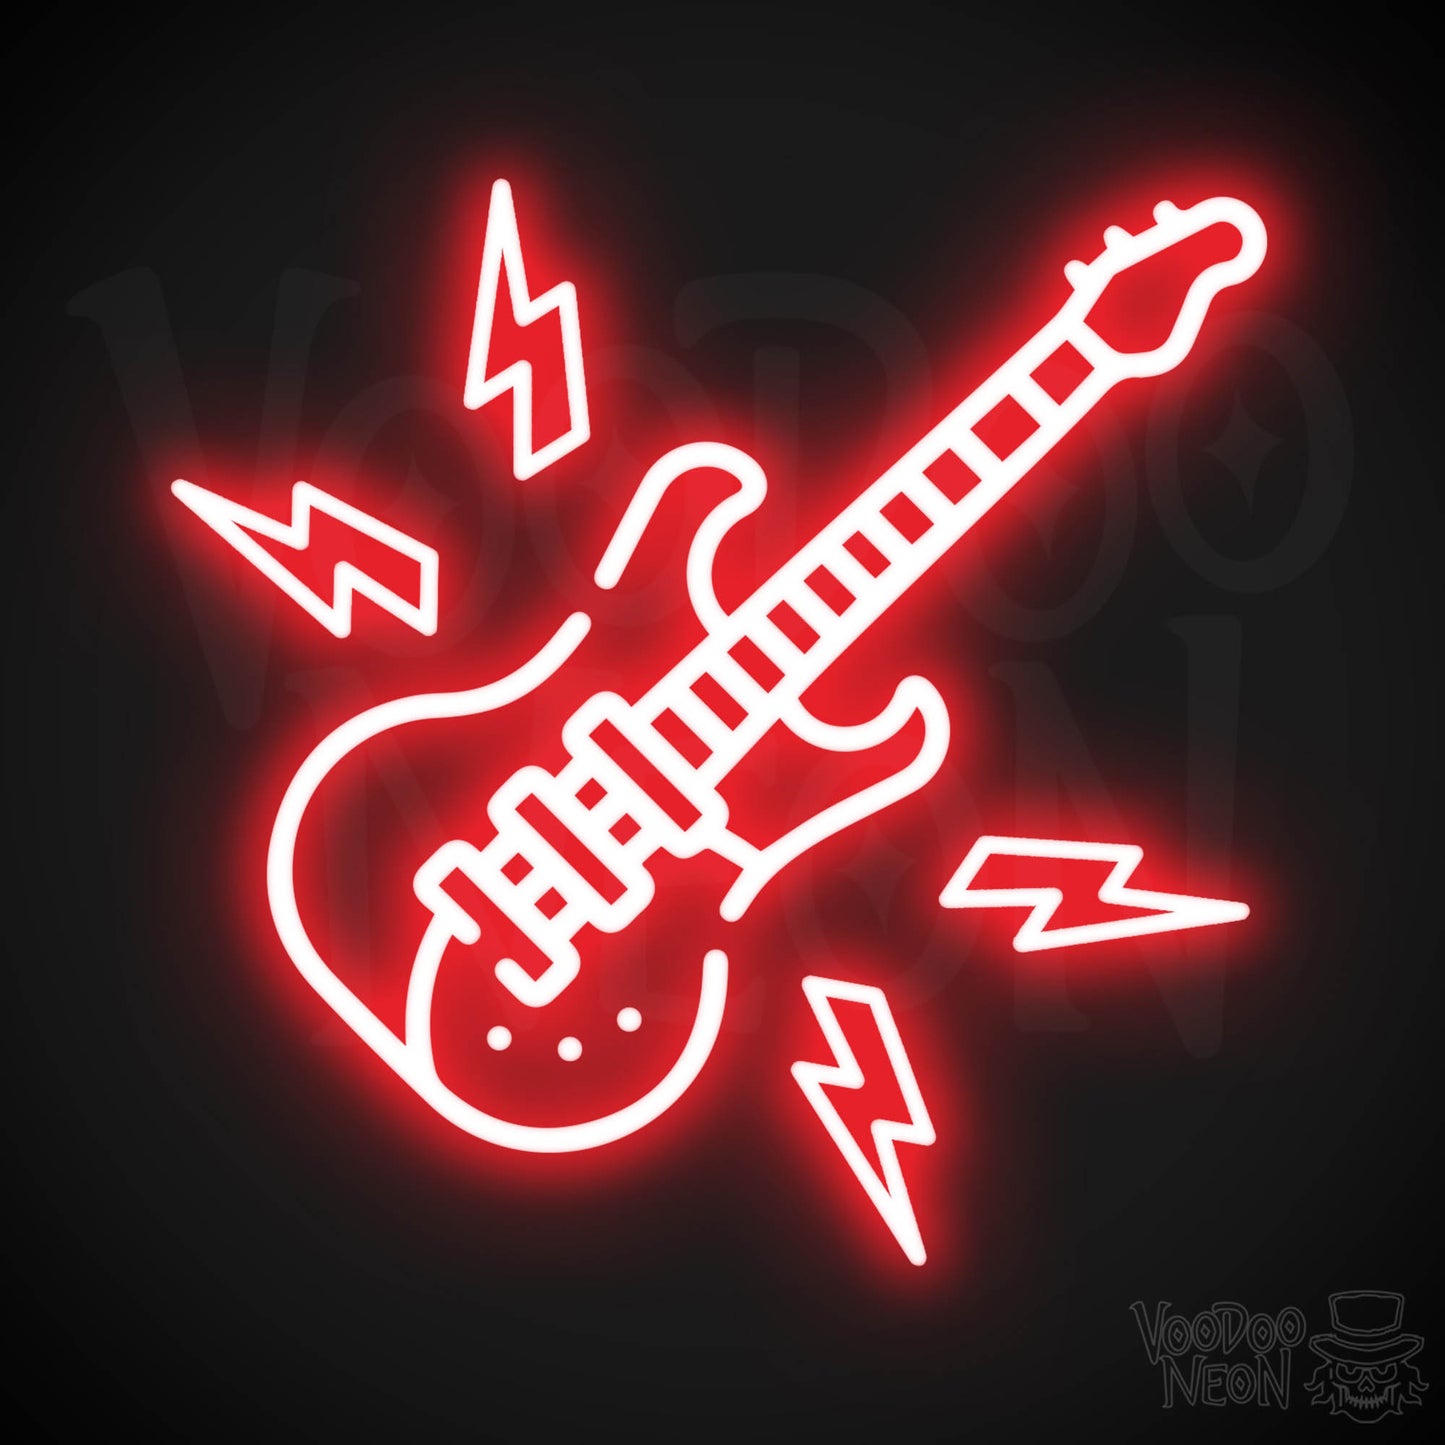 Neon Electric Guitar Sign - Electric Guitar Neon Sign - Electric Guitar Neon Wall Art - Color Red